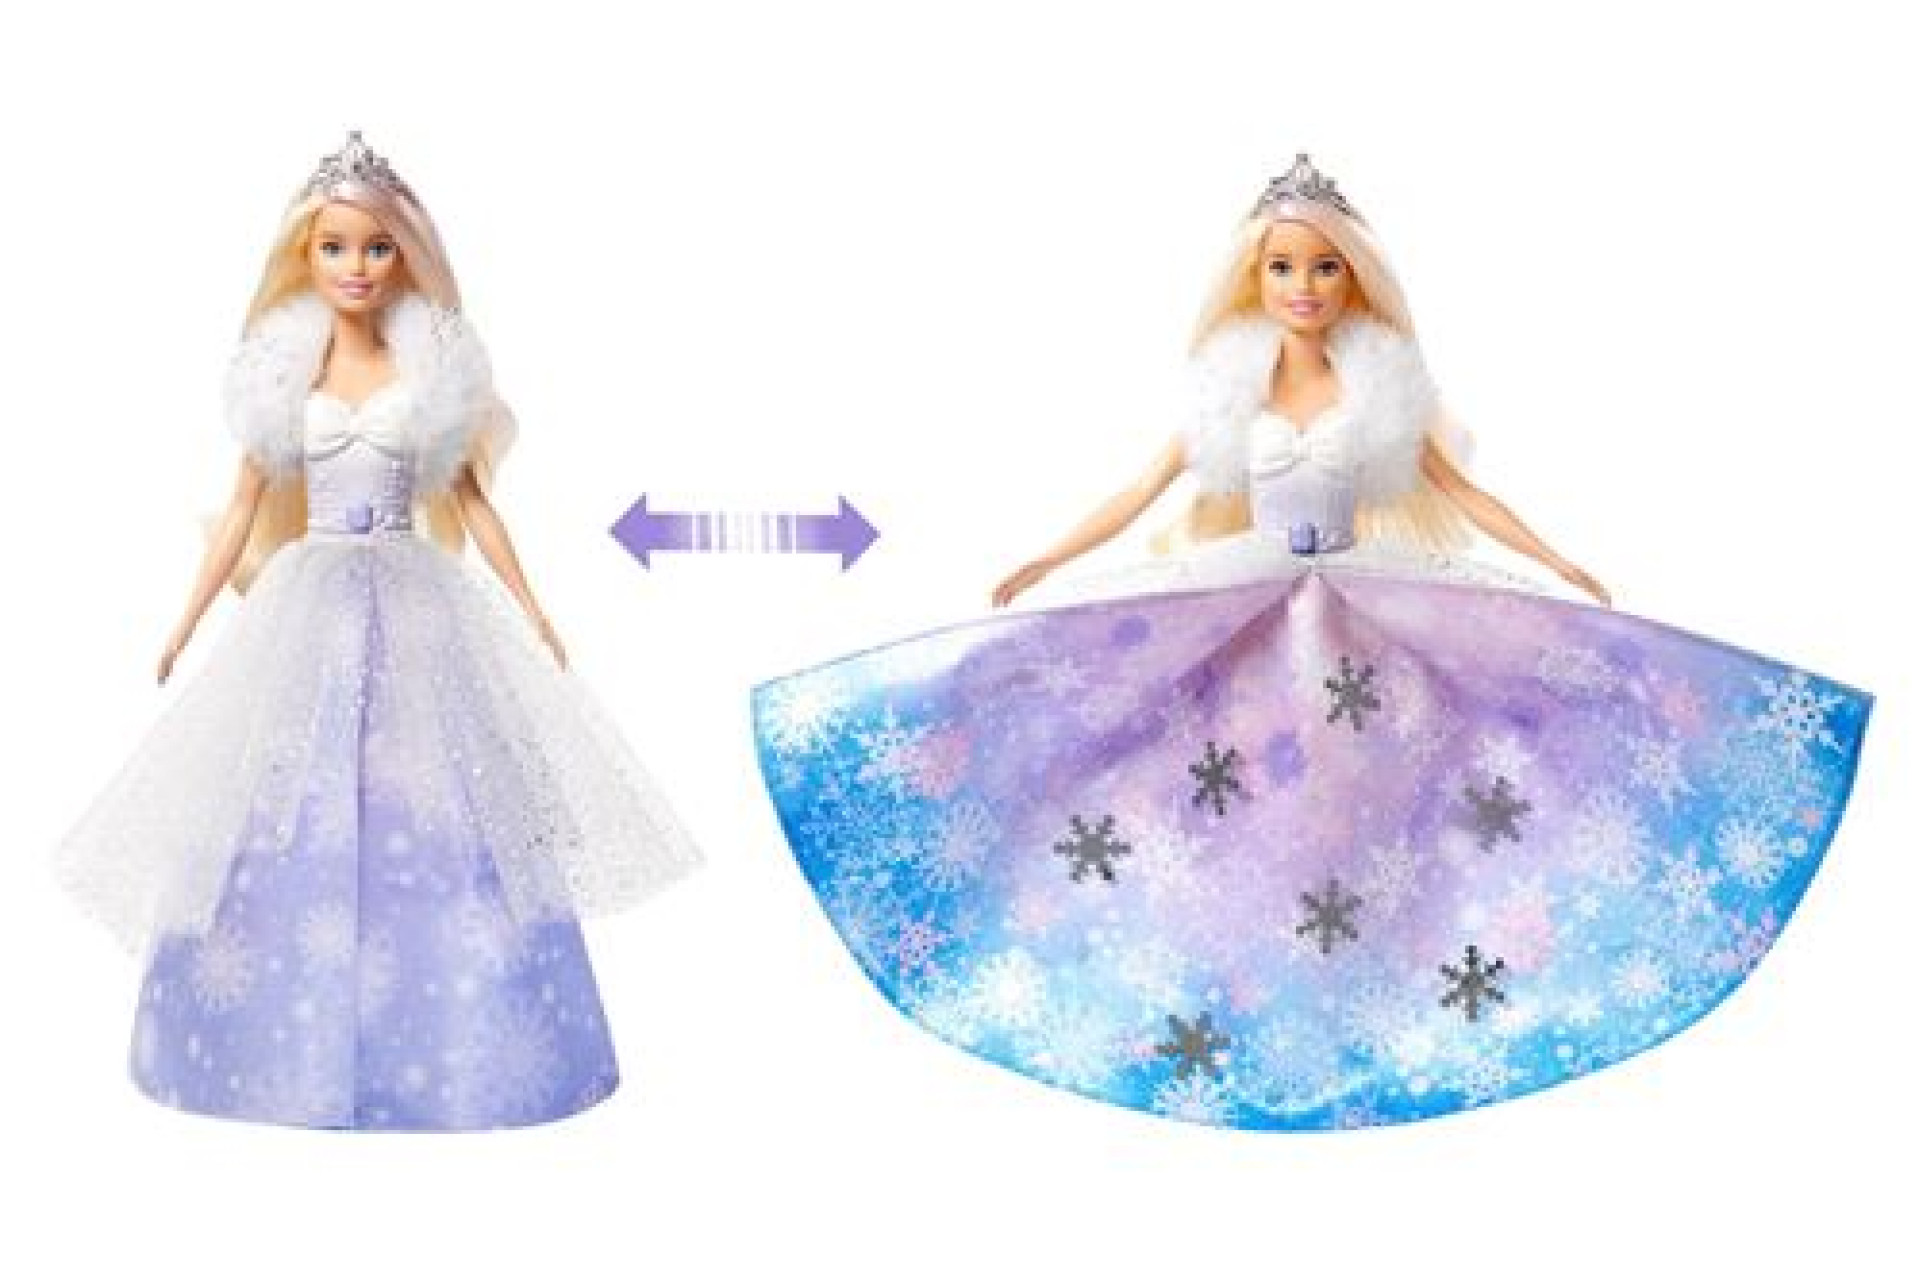 Barbie et sa licorne lumineuse Dreamtopia - Barbie